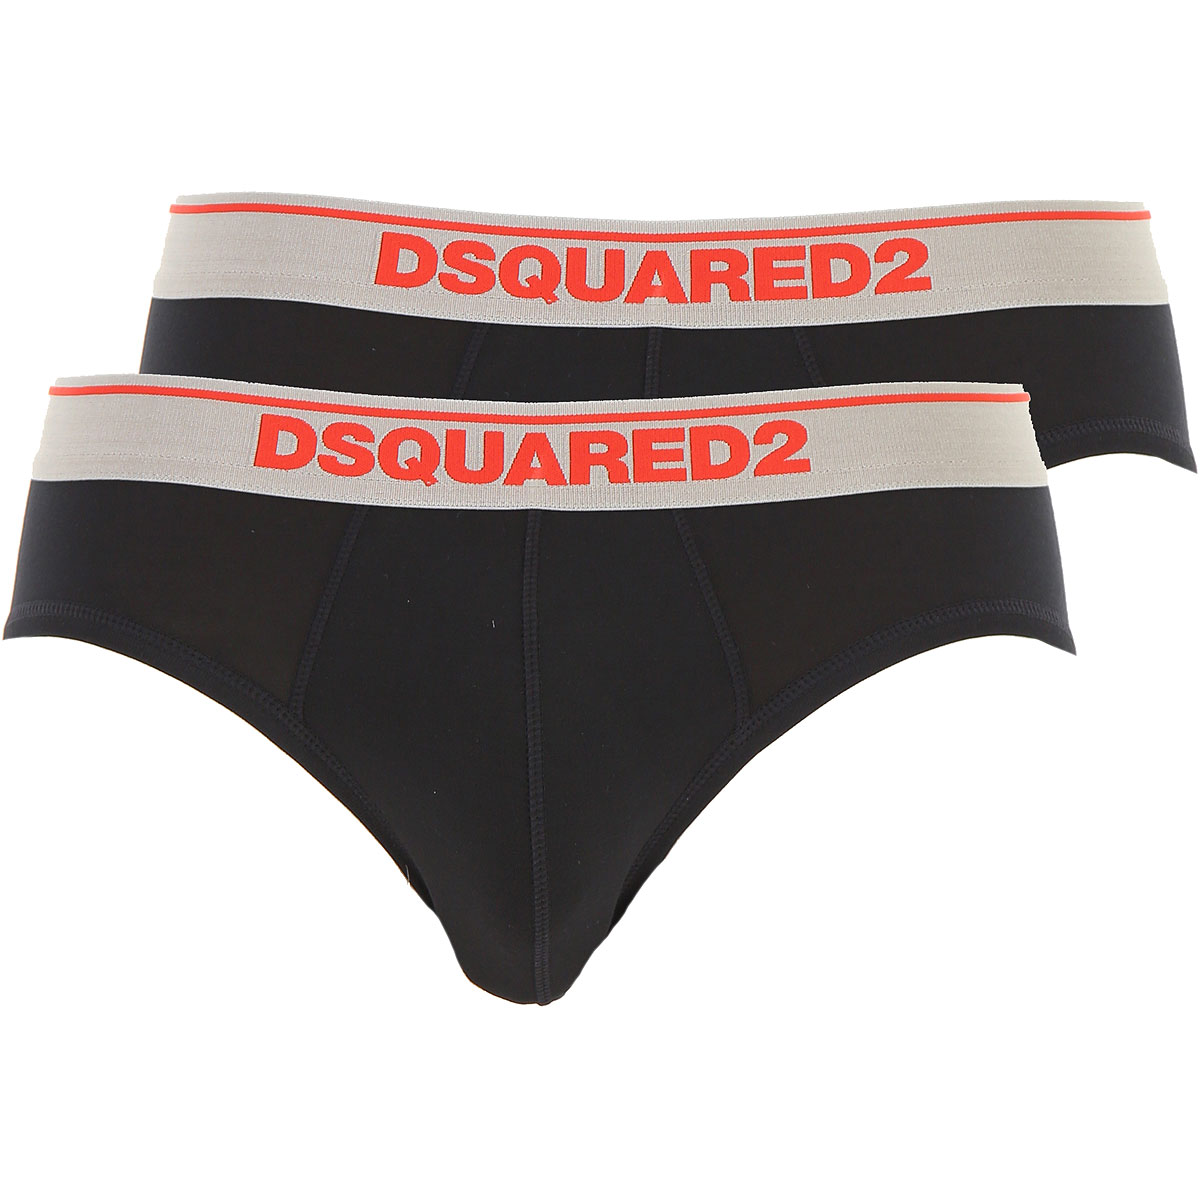 Mens Underwear Dsquared2, Style code 